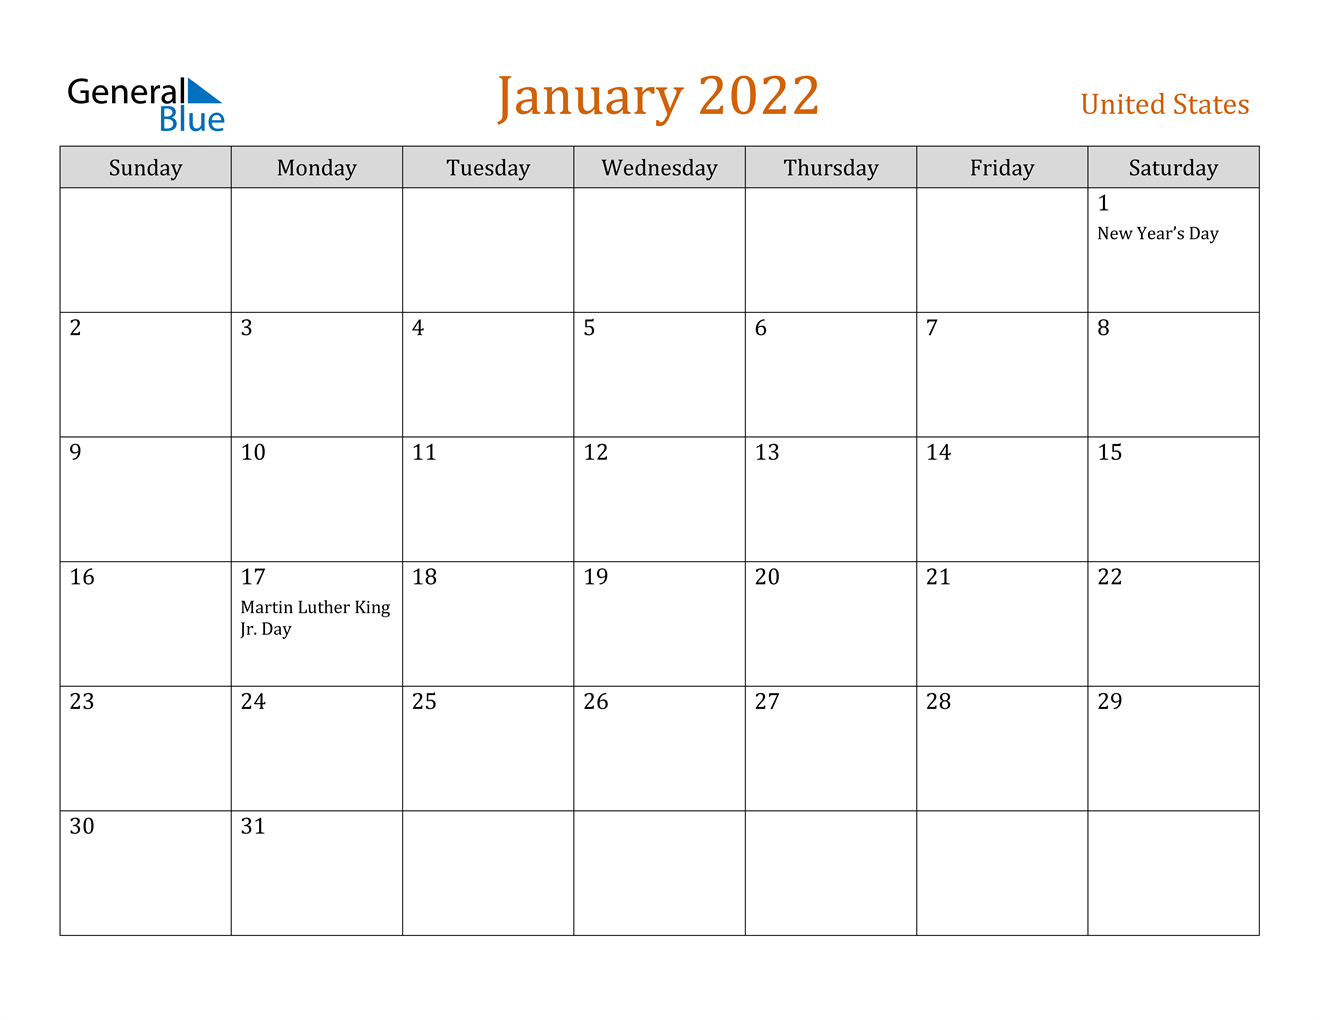 January 2022 Calendar - United States